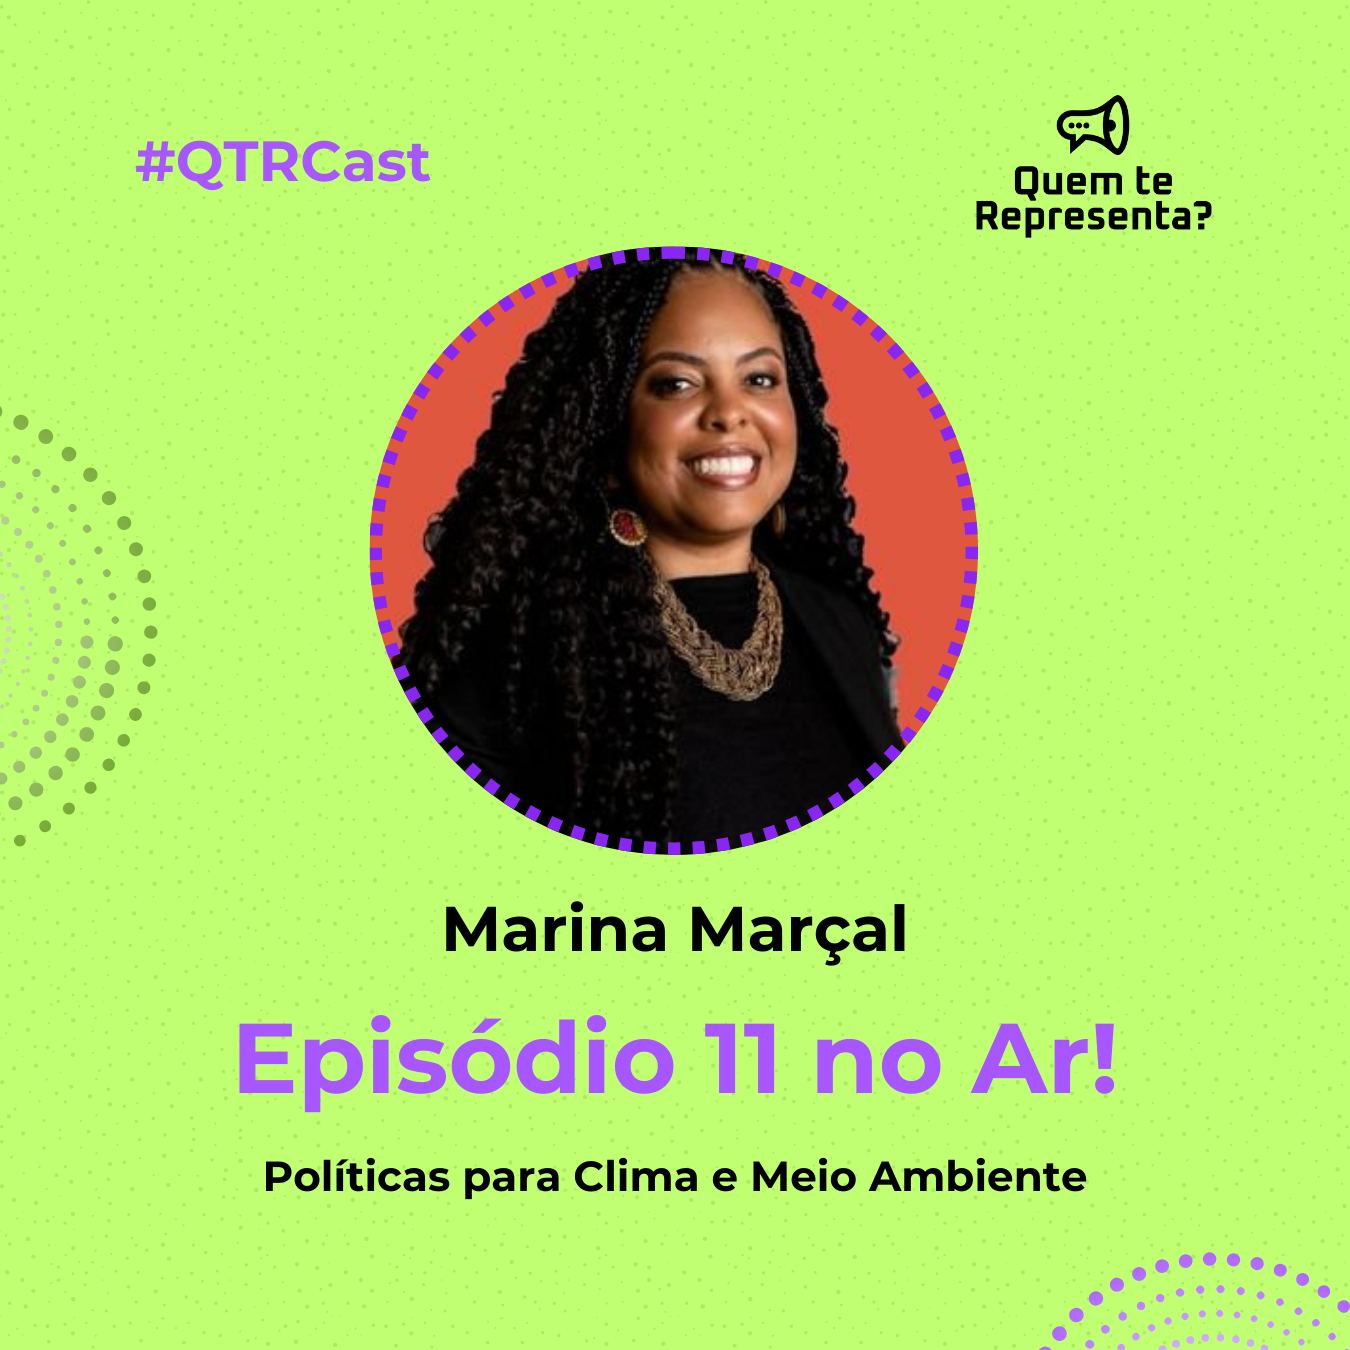 Marina Marçal emergência climática - QTRCast